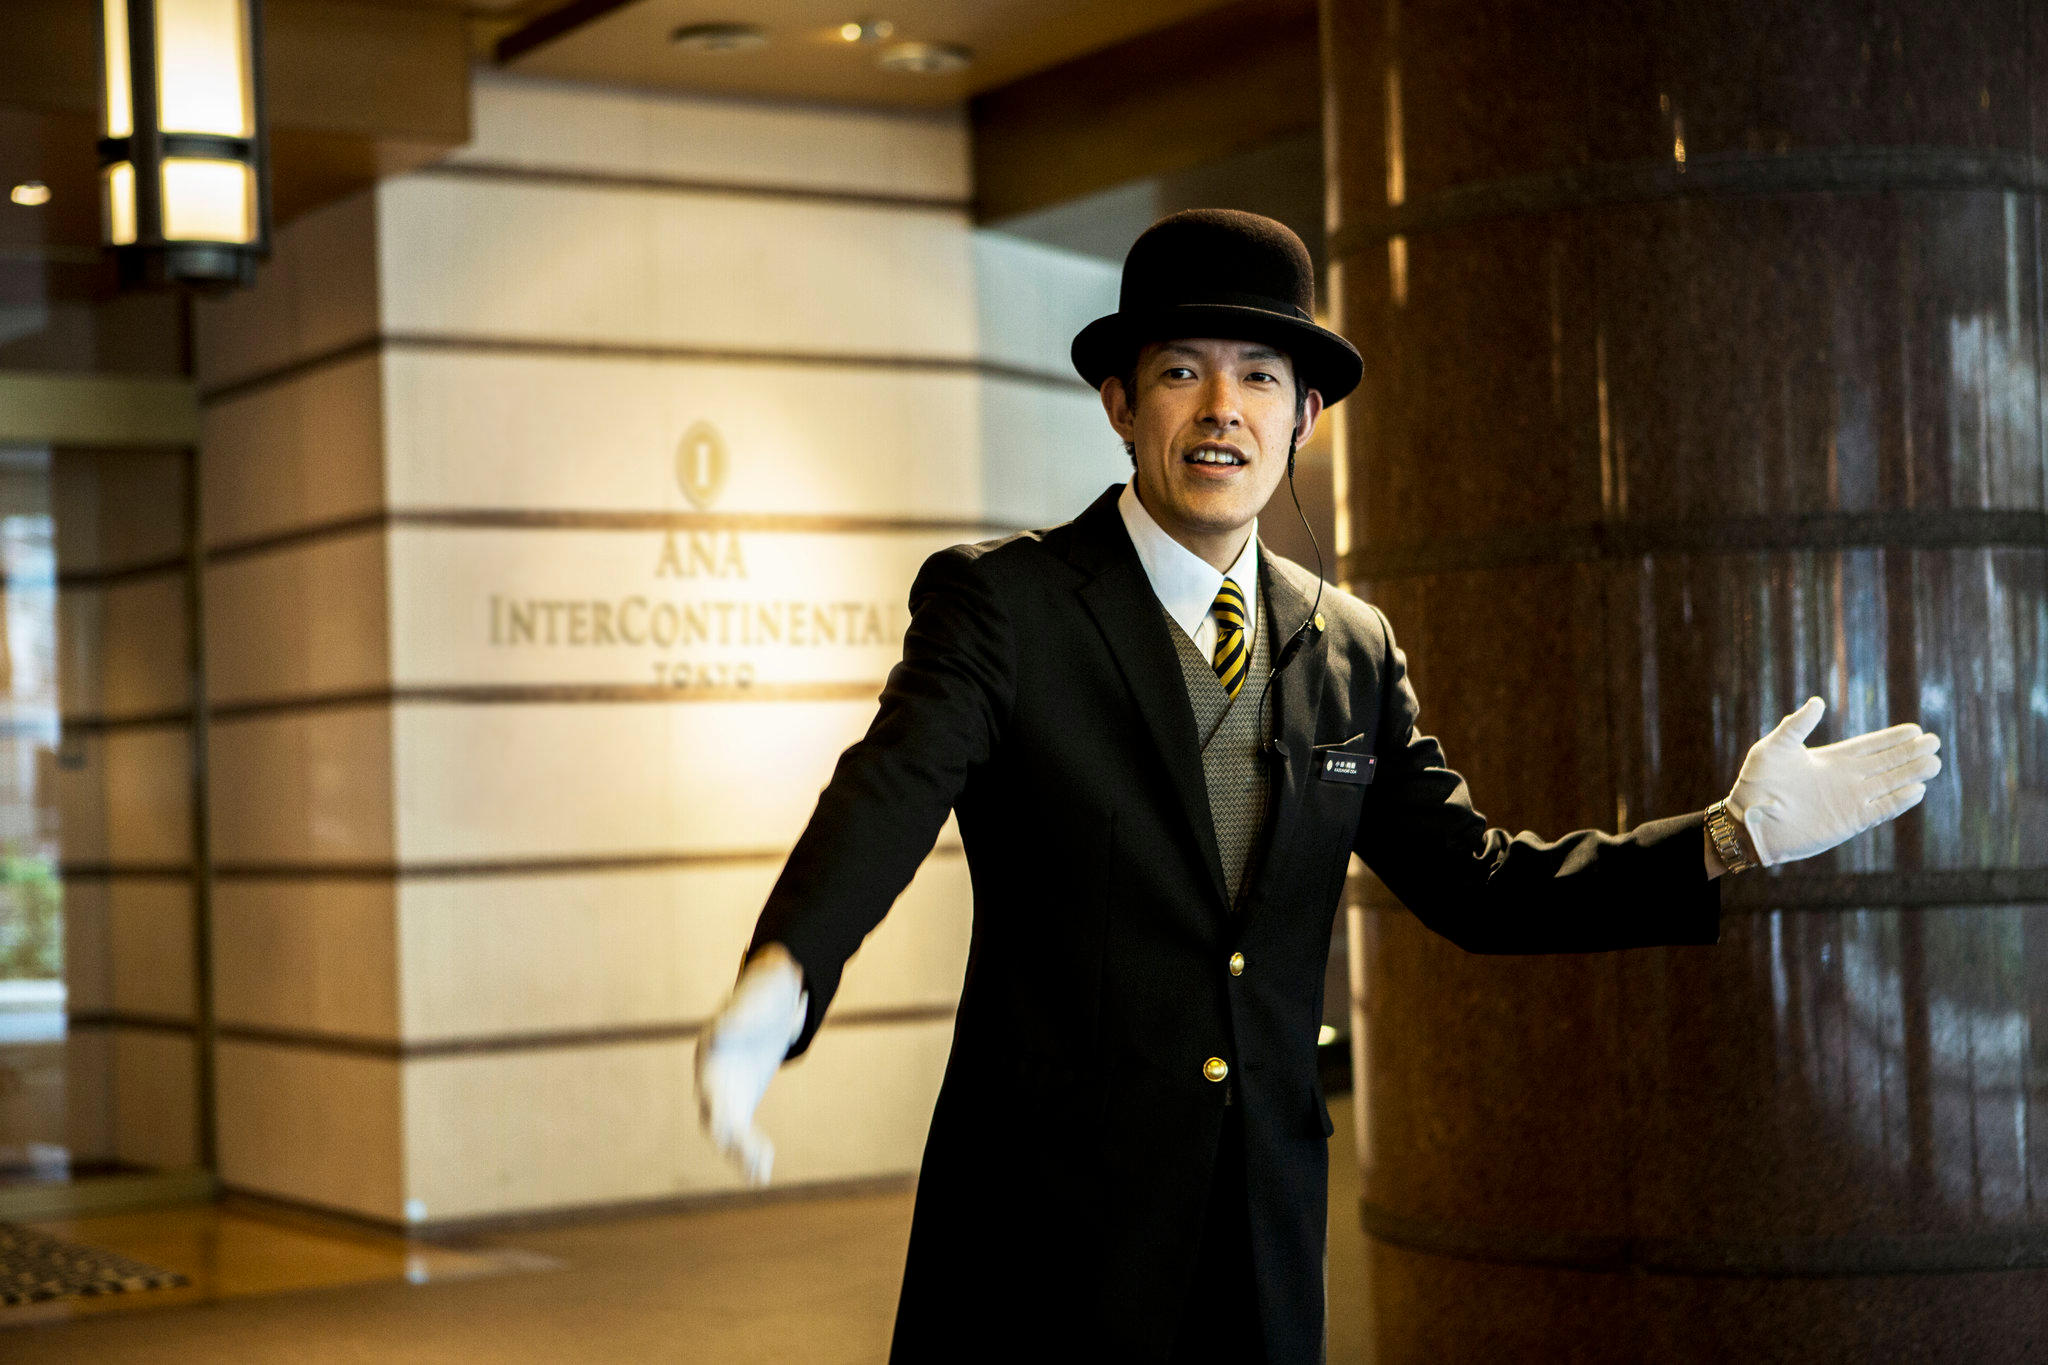 InterContinental - ANA Tokyo, an IHG Hotel